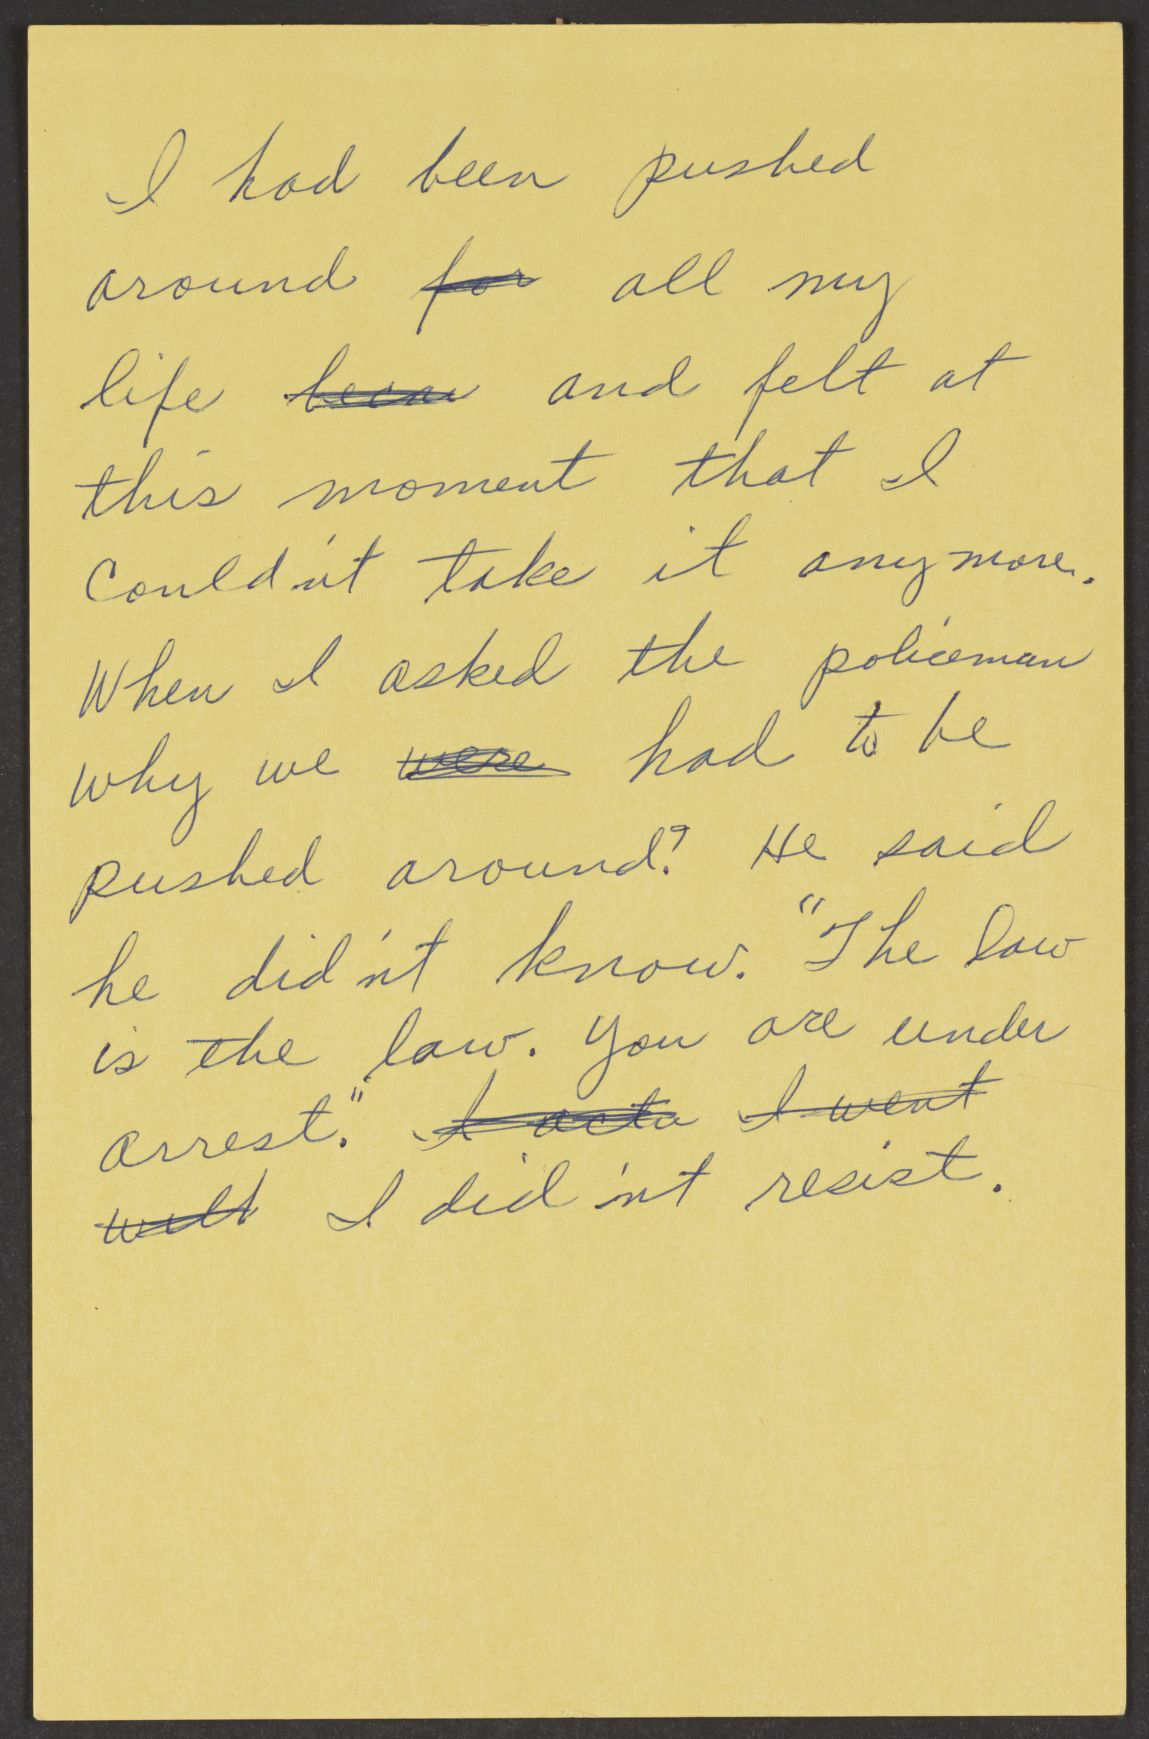 Handwritten draft page from a Rosa Parks speech